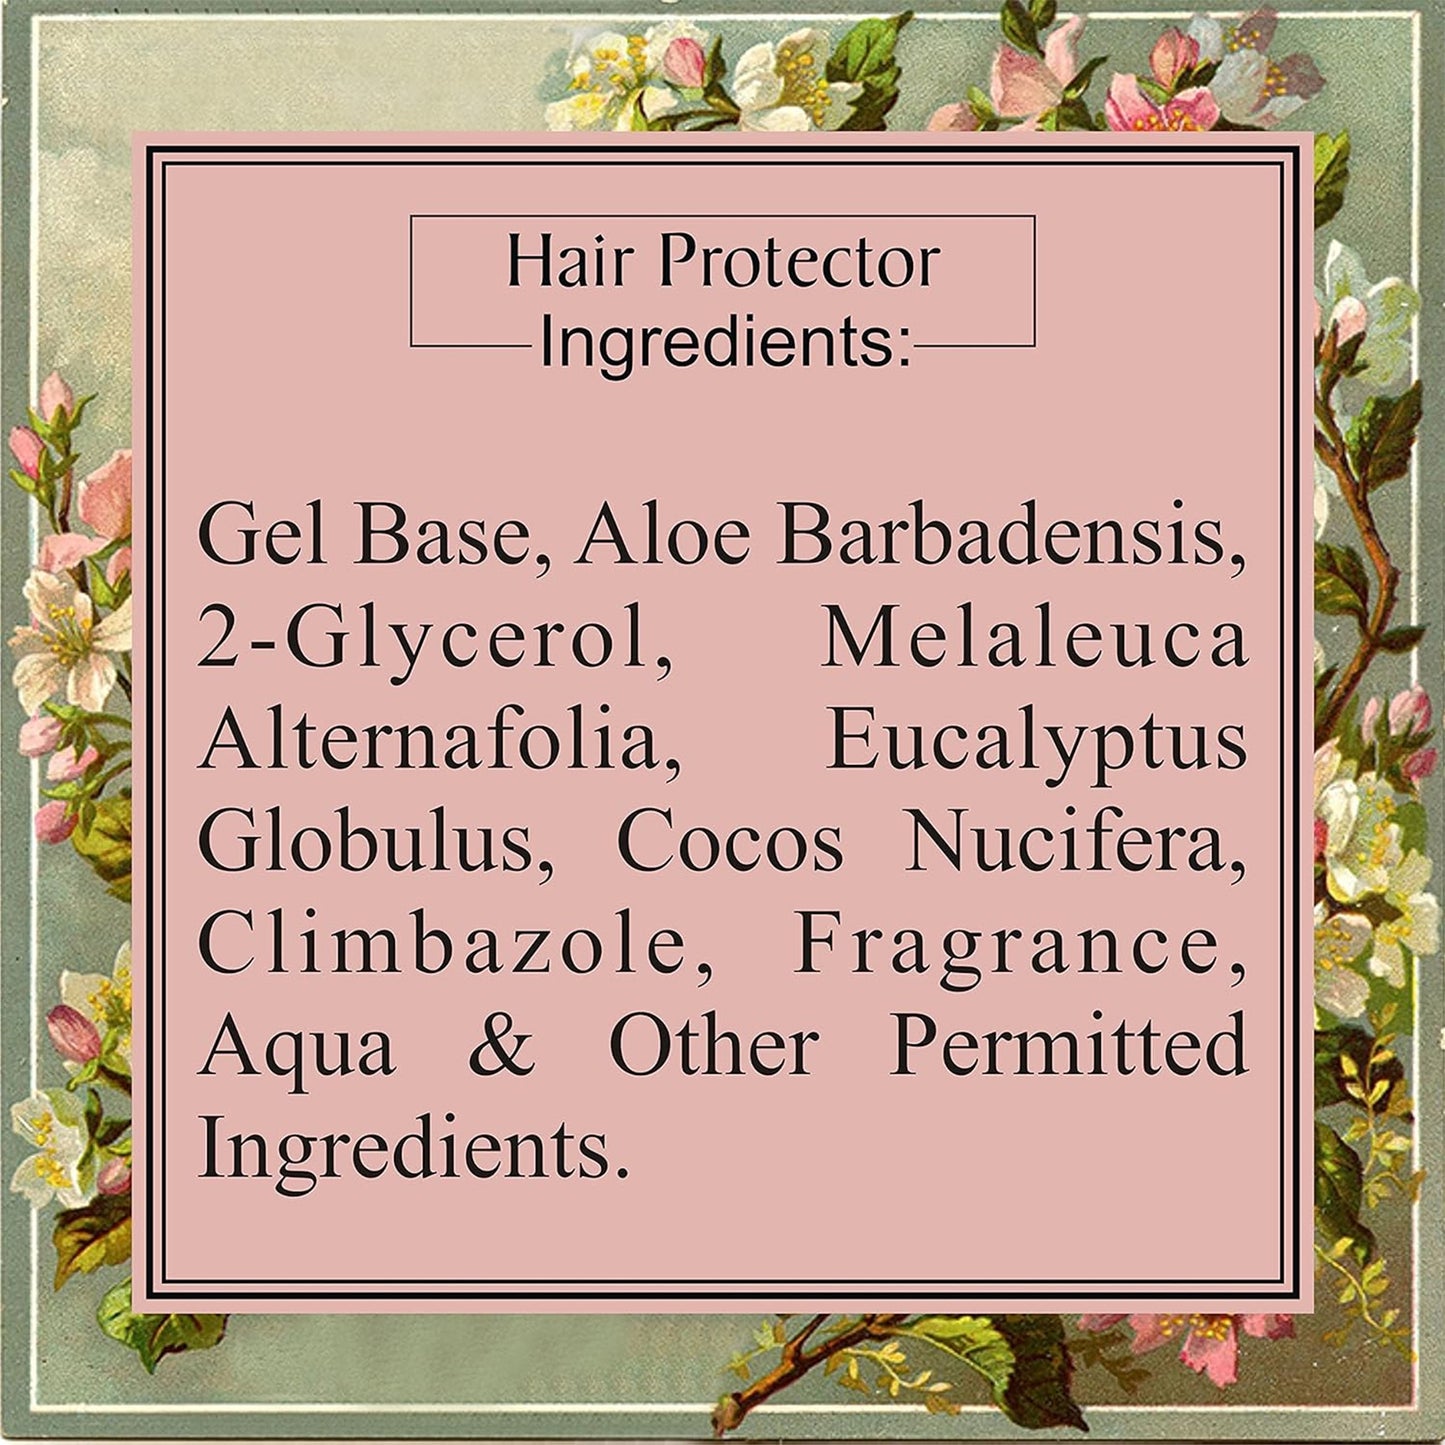 LUXURI Hair Protector Lotion, 30ml